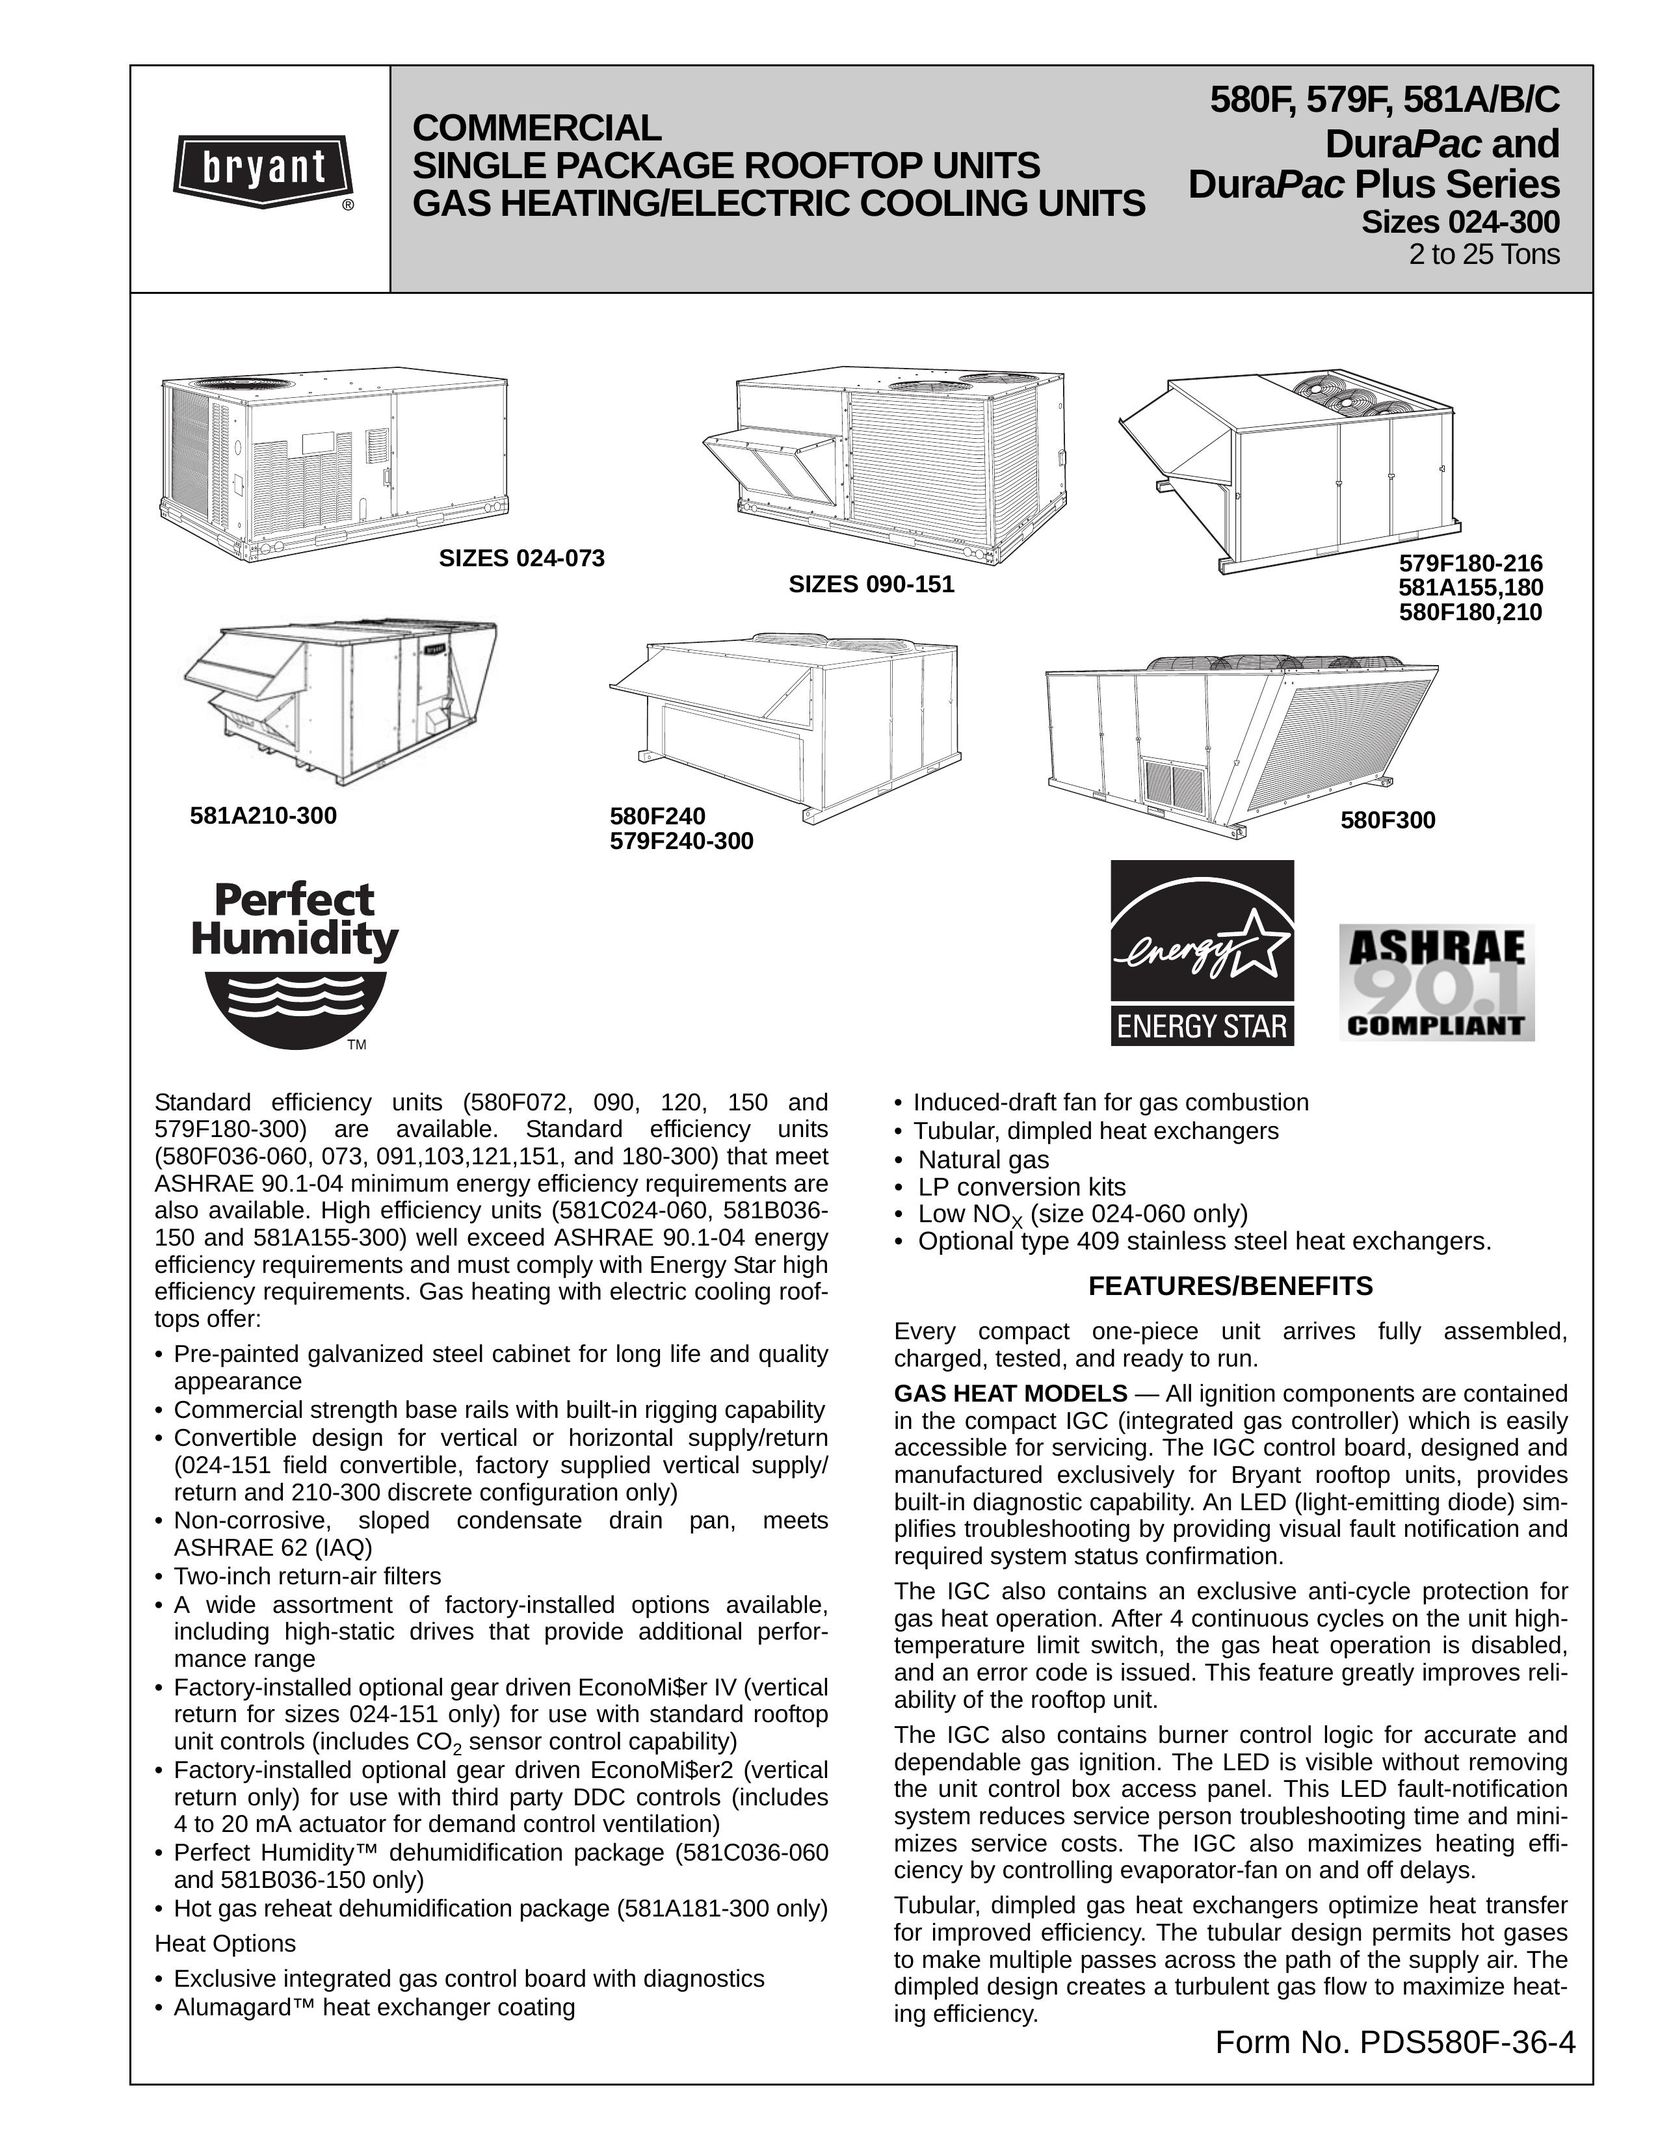 Bryant 581C Gas Heater User Manual